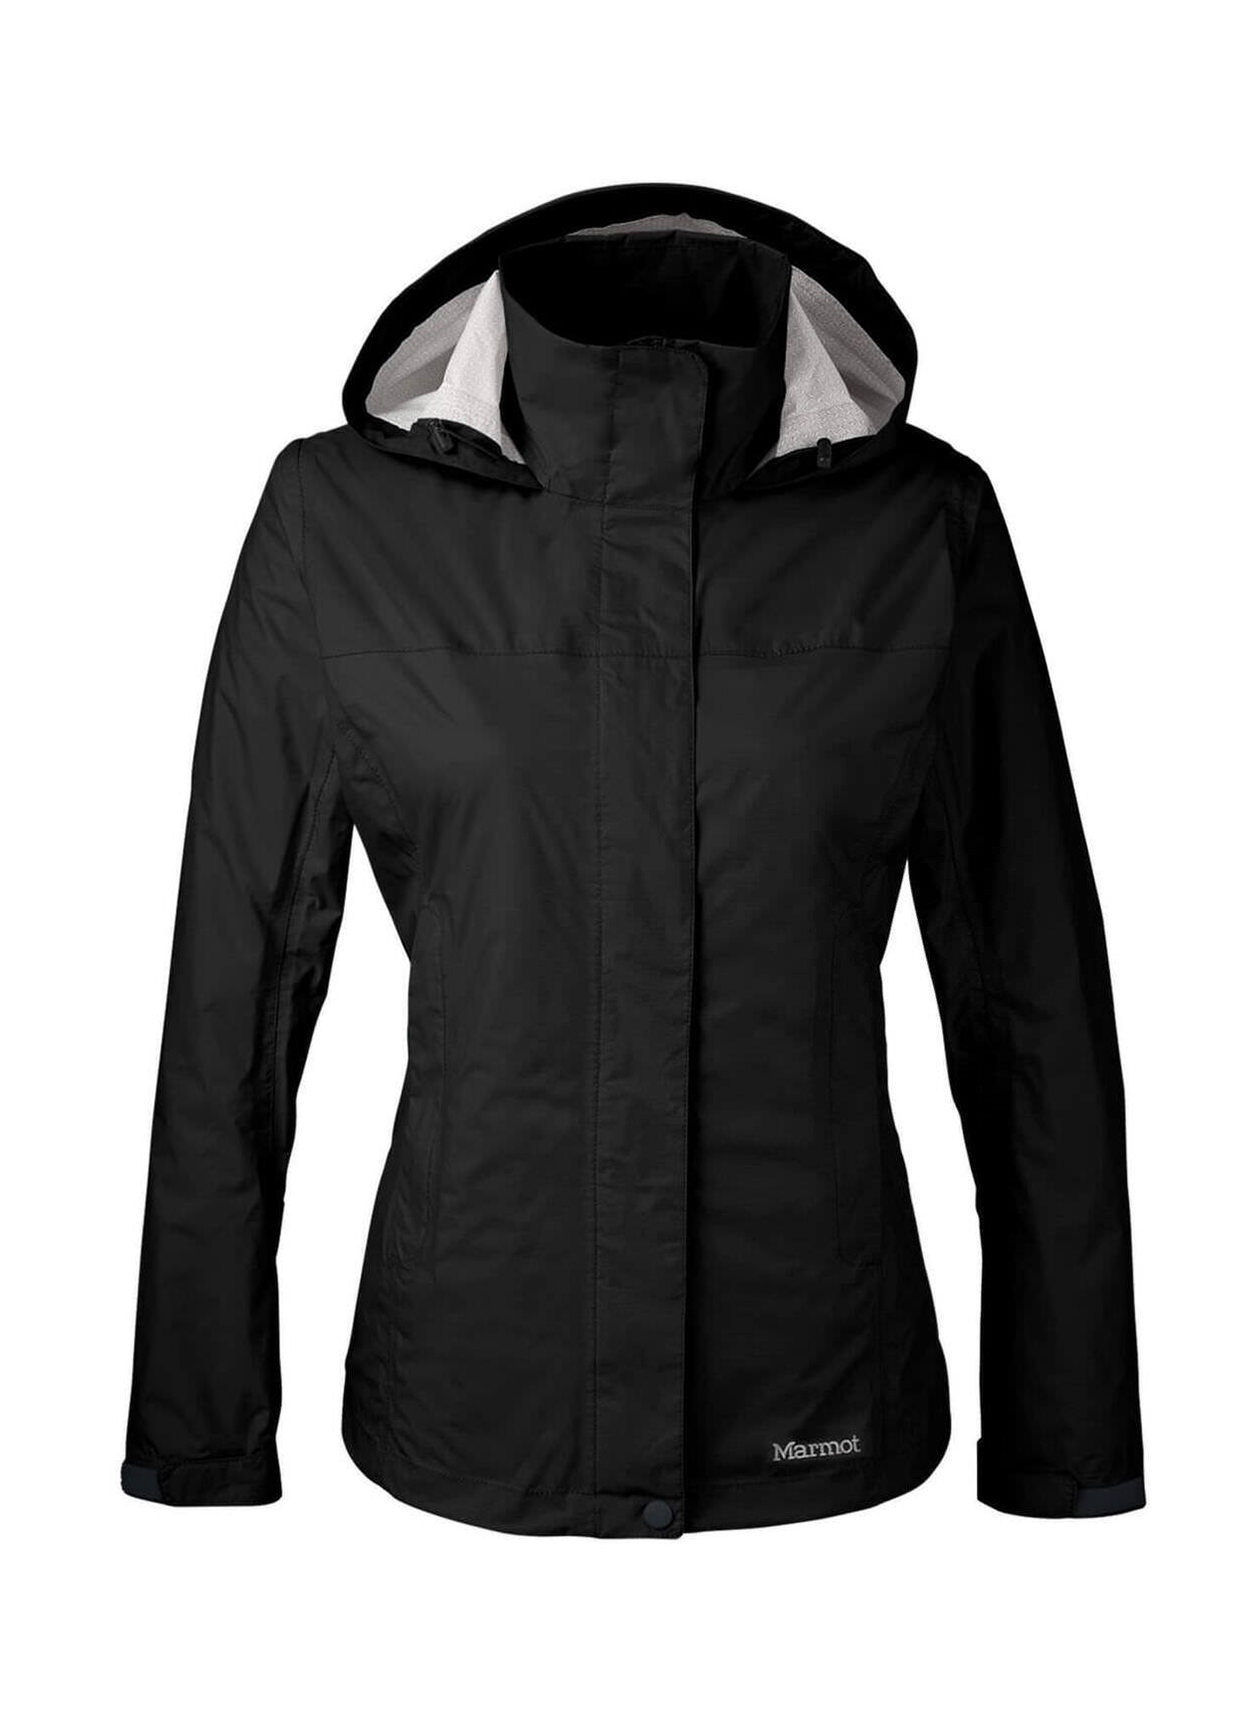 Eddie Bauer Jackets: Women's Waterproof EB551 BLK Black Rain Jacket